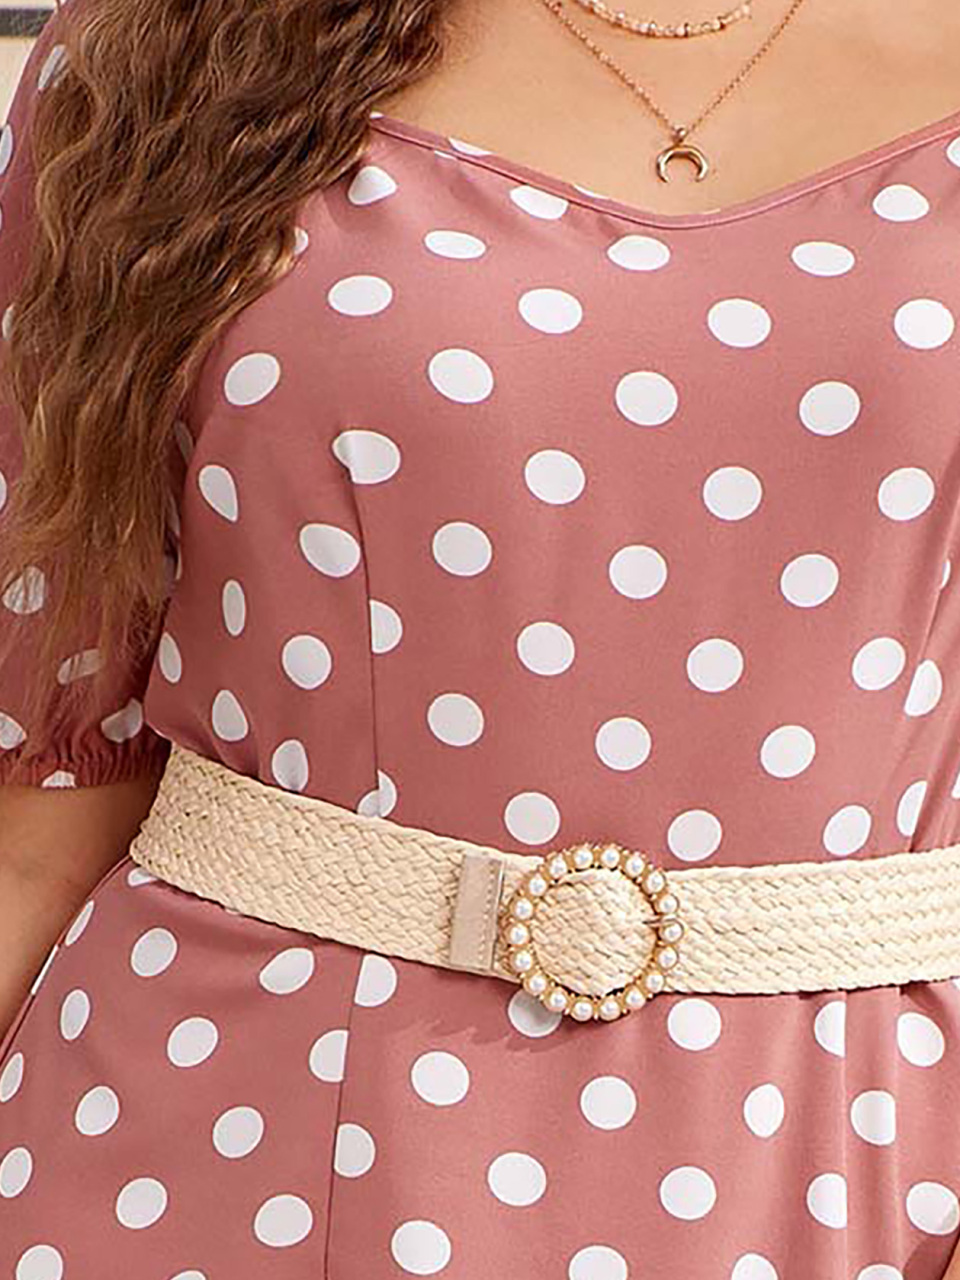 Women's Plus Size Round Neck Short Sleeve Polka Dot Dress